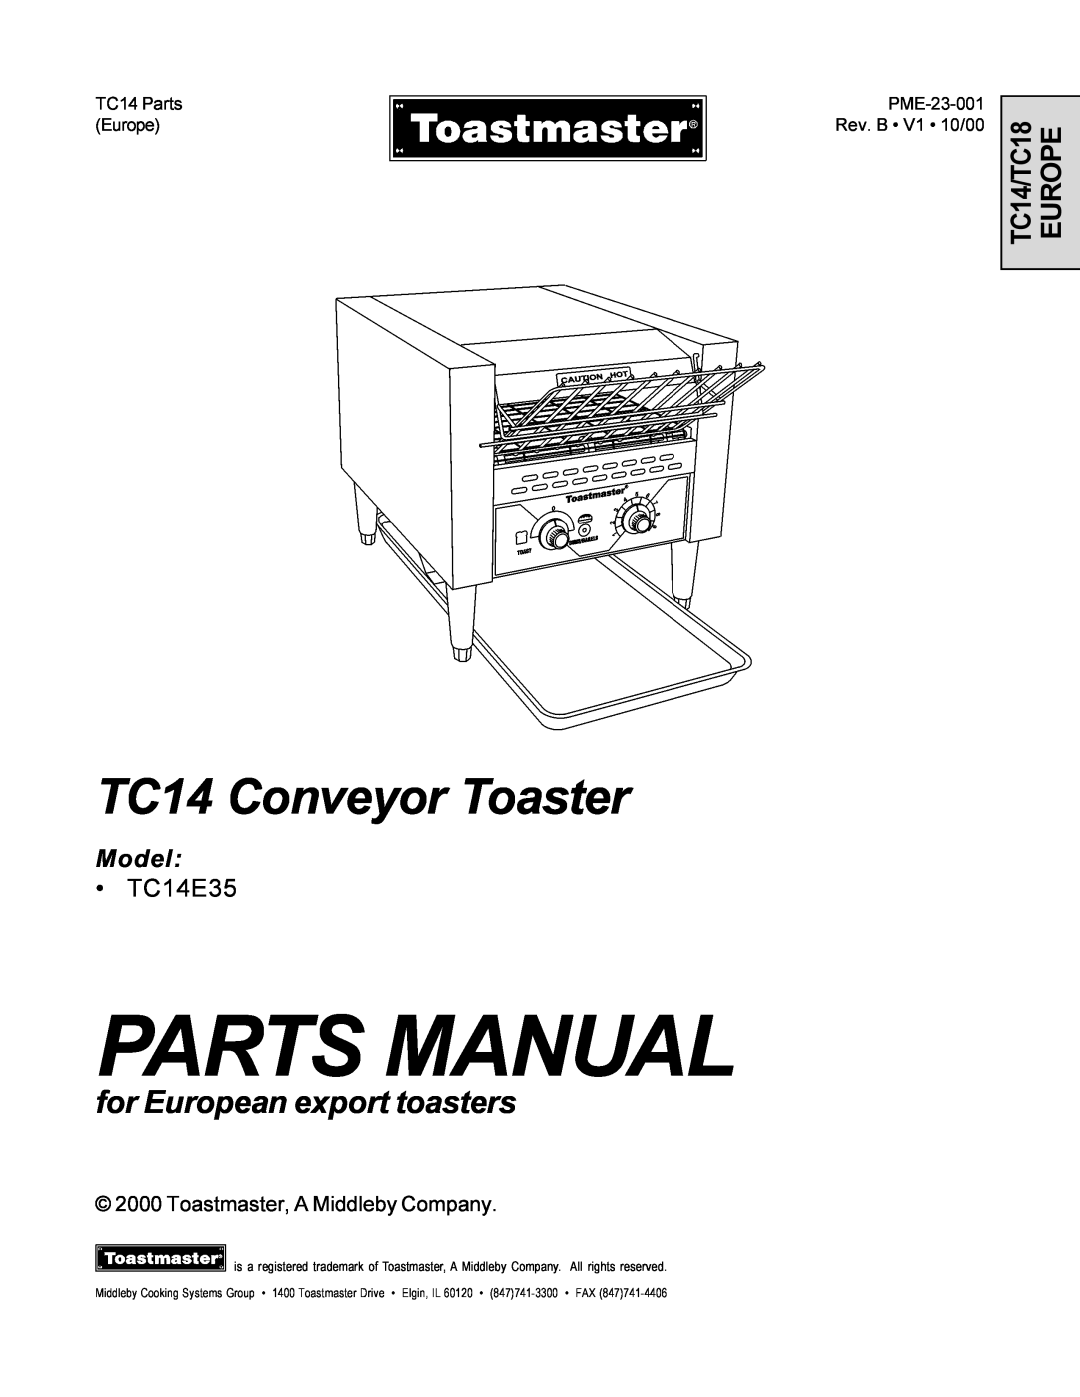 Toastmaster TC14E35 manual Parts Manual, TC14 Conveyor Toaster, for European export toasters, Model, TC14/TC18 EUROPE 